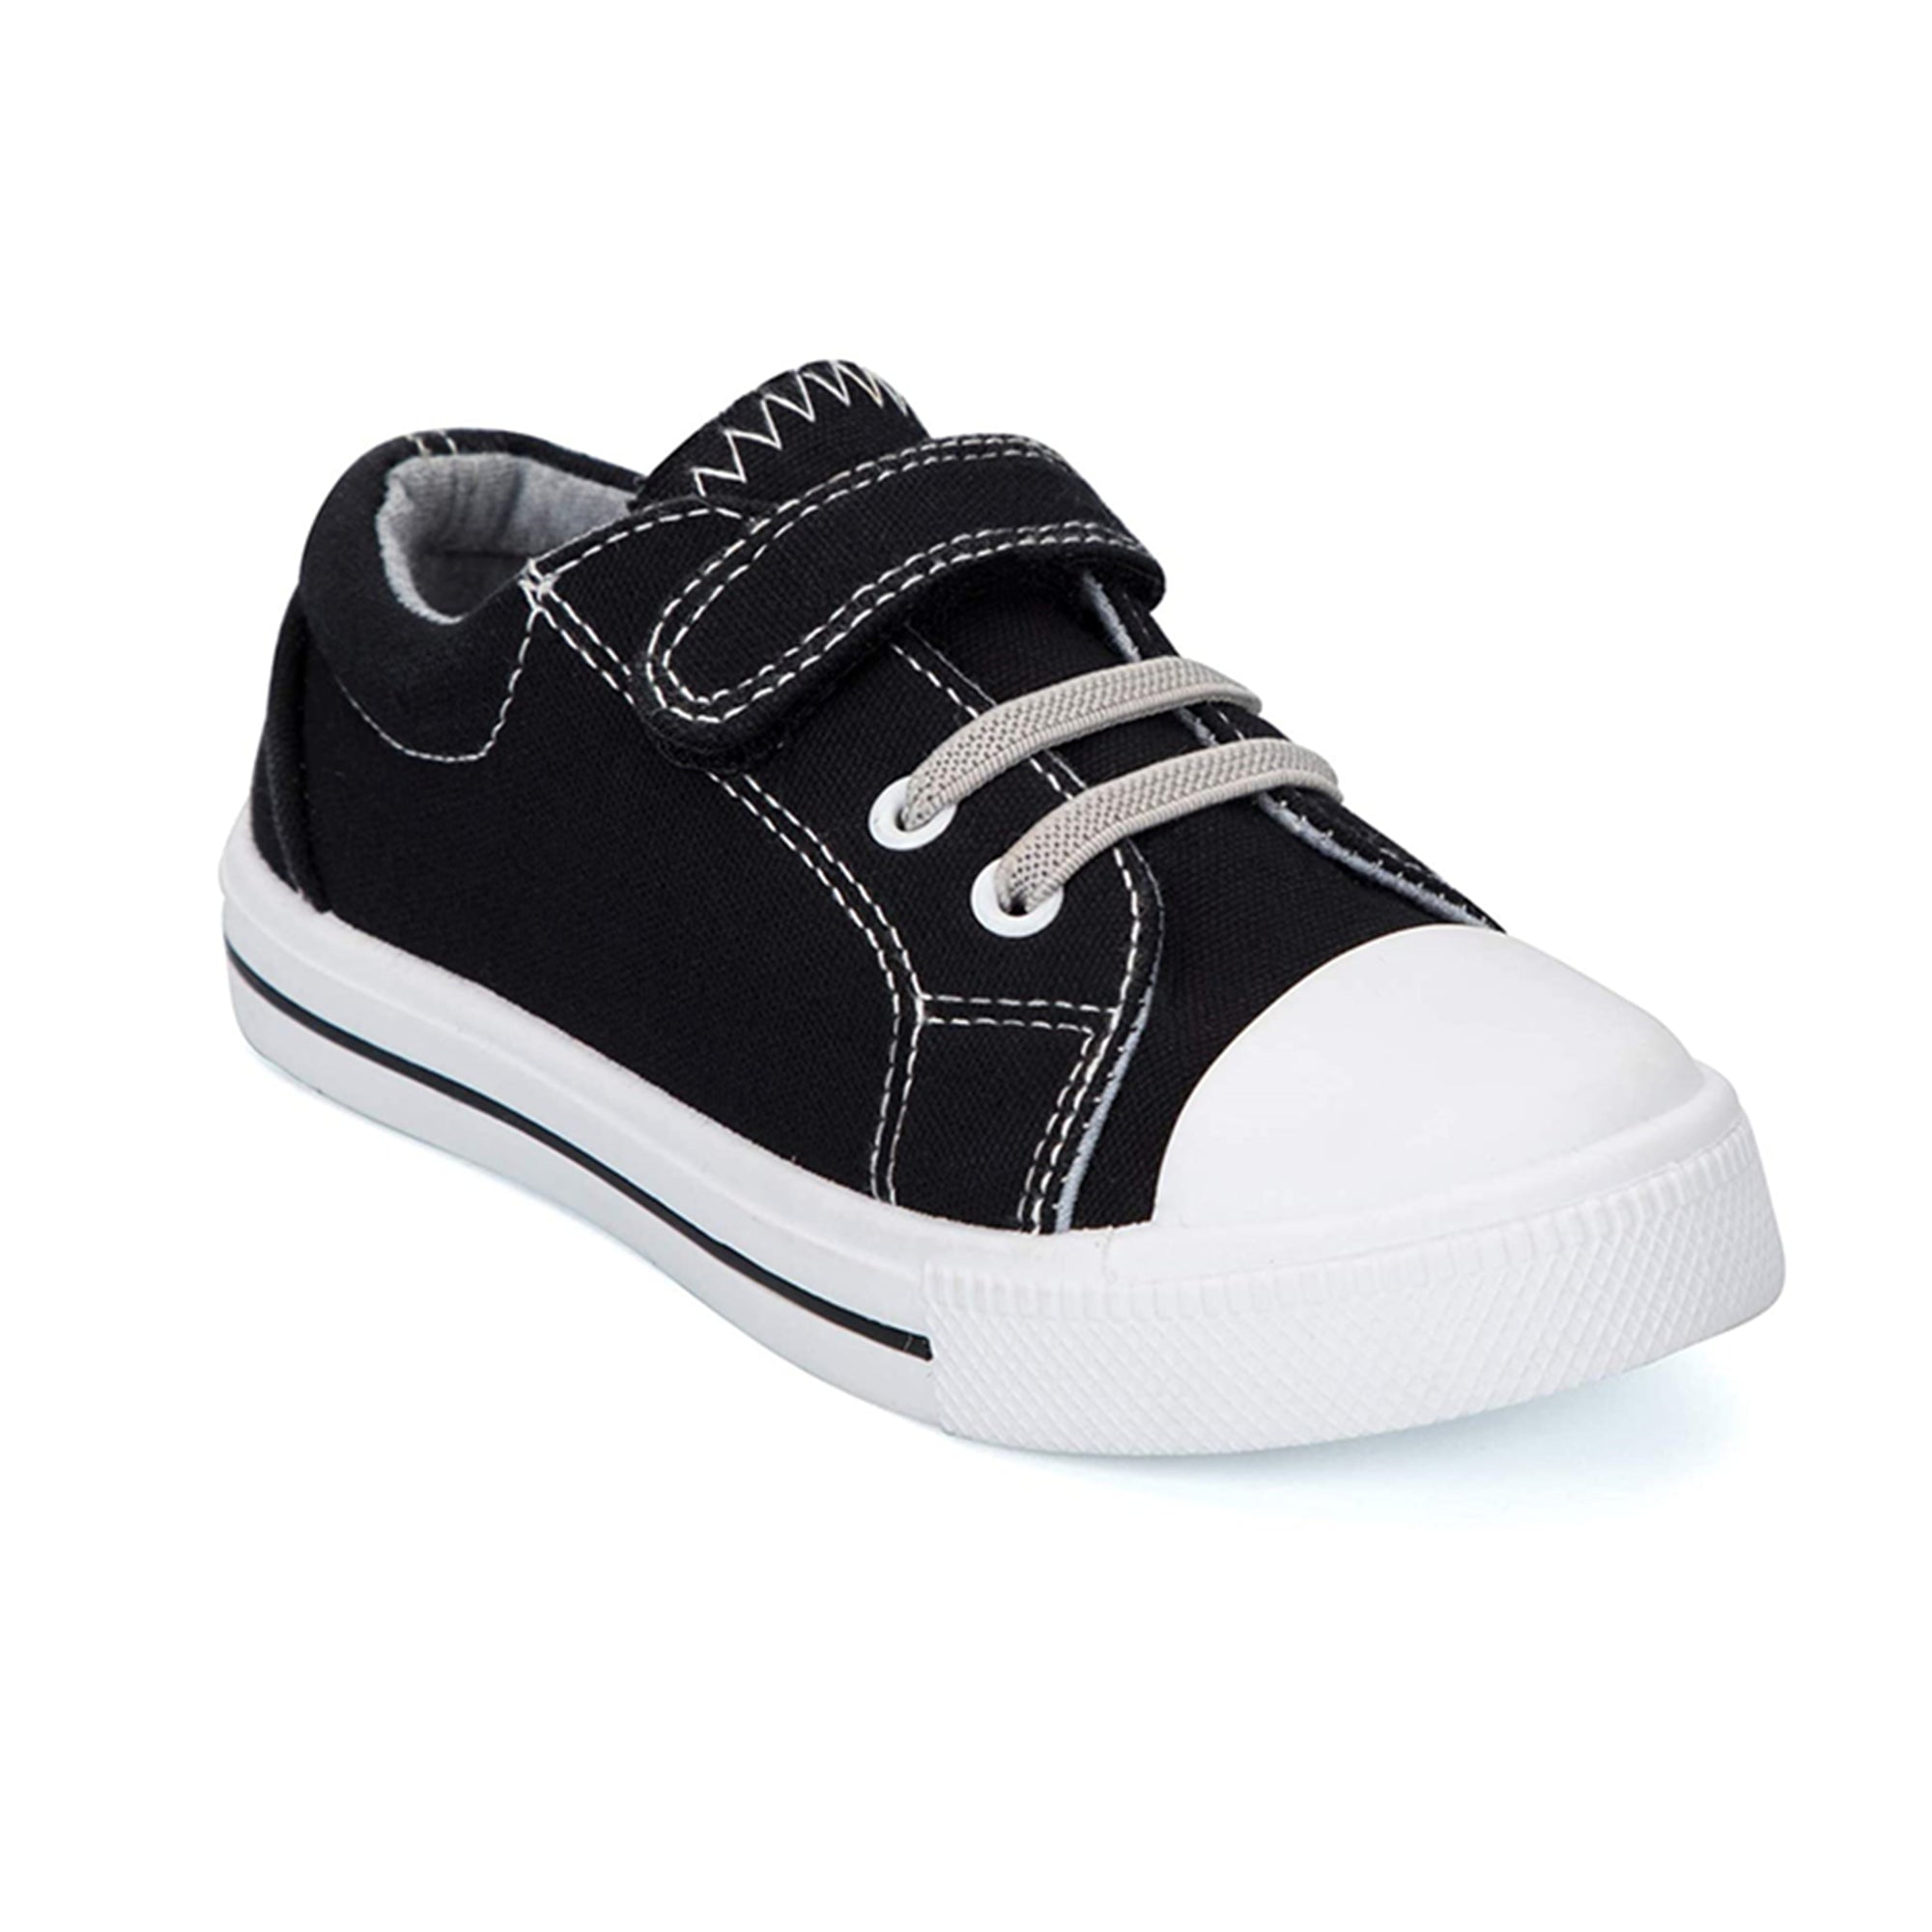 Kushyshoo Kid Canvas Shoes Black Casual Sneaker Size 9 Toddler Boy ...